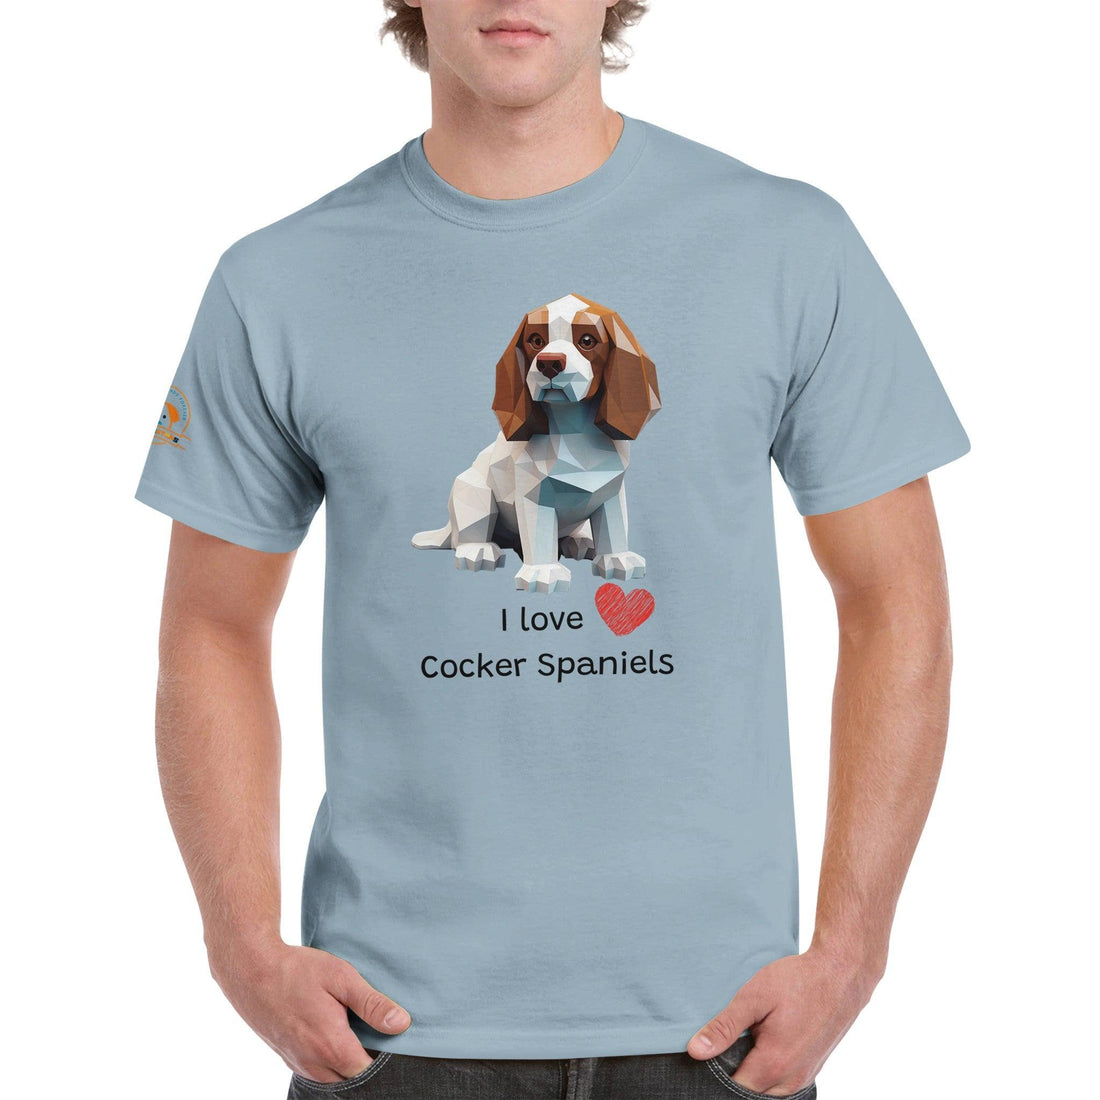 Polygon Pups: Cocker Spaniels - Geometric Dog Breed T-Shirt - Woofingtons